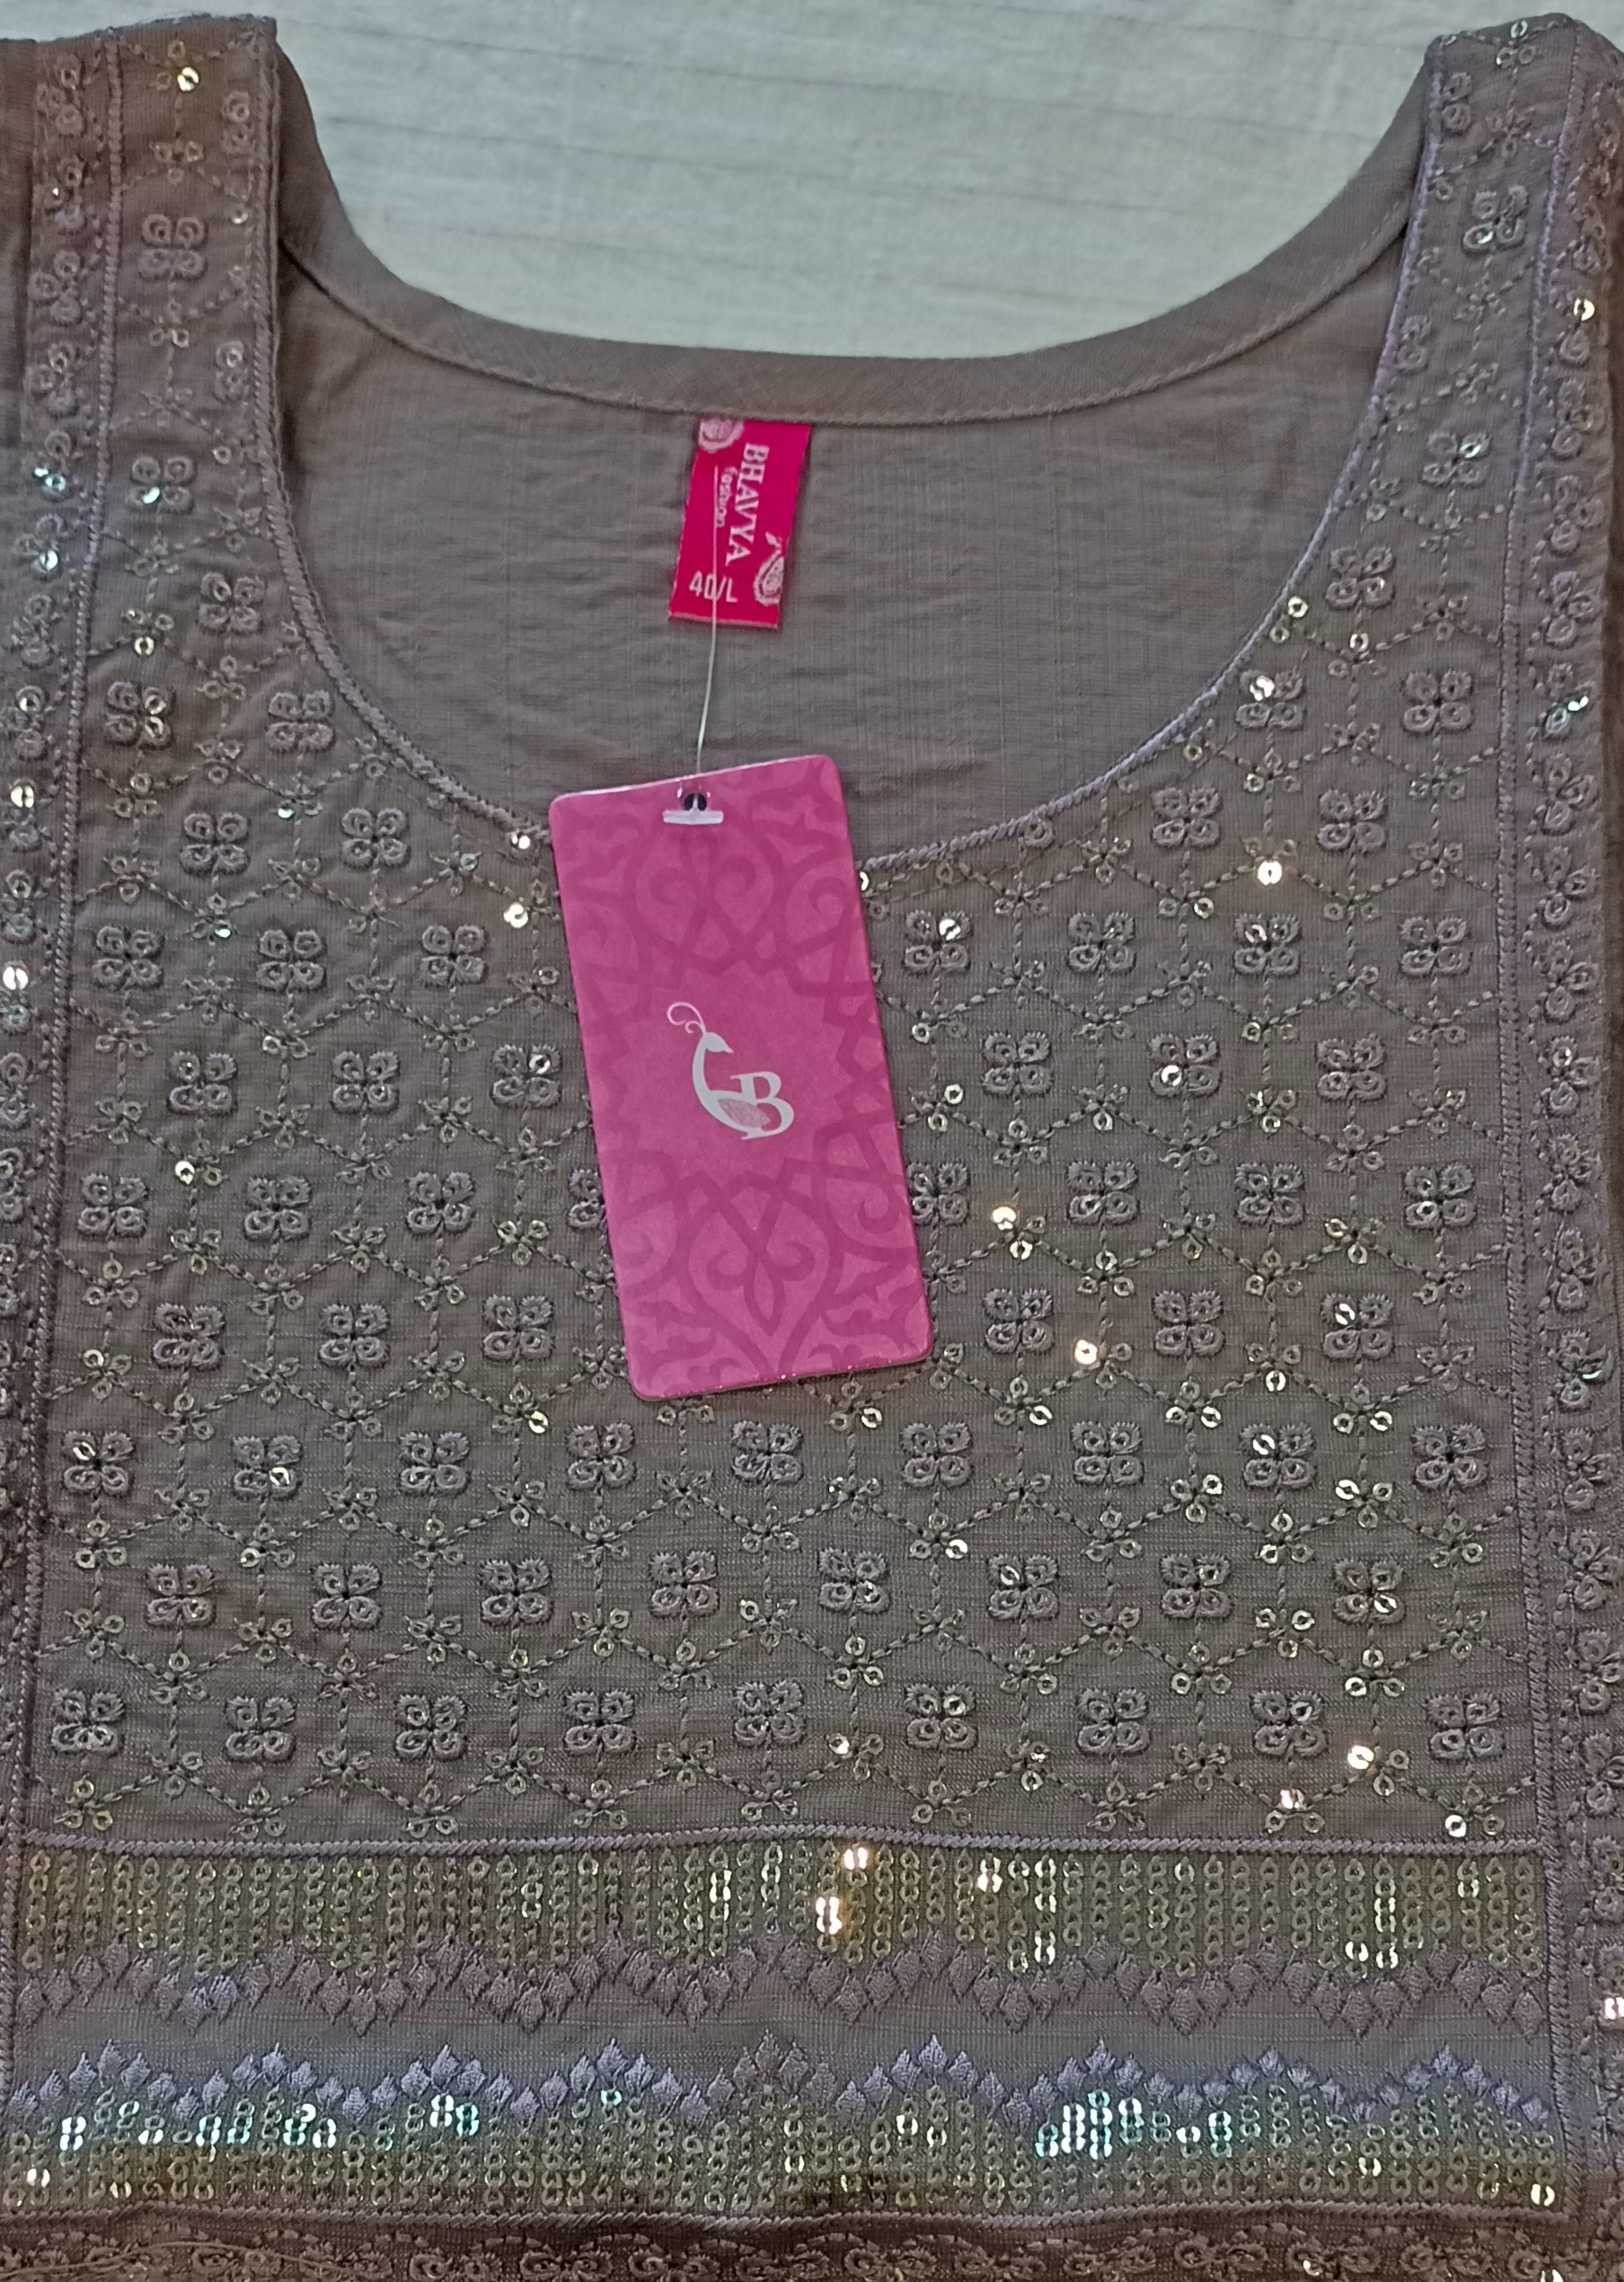 peplum.long blouse kurti type design#khushboofamilyvlog #topdesigns #blouse  - YouTube